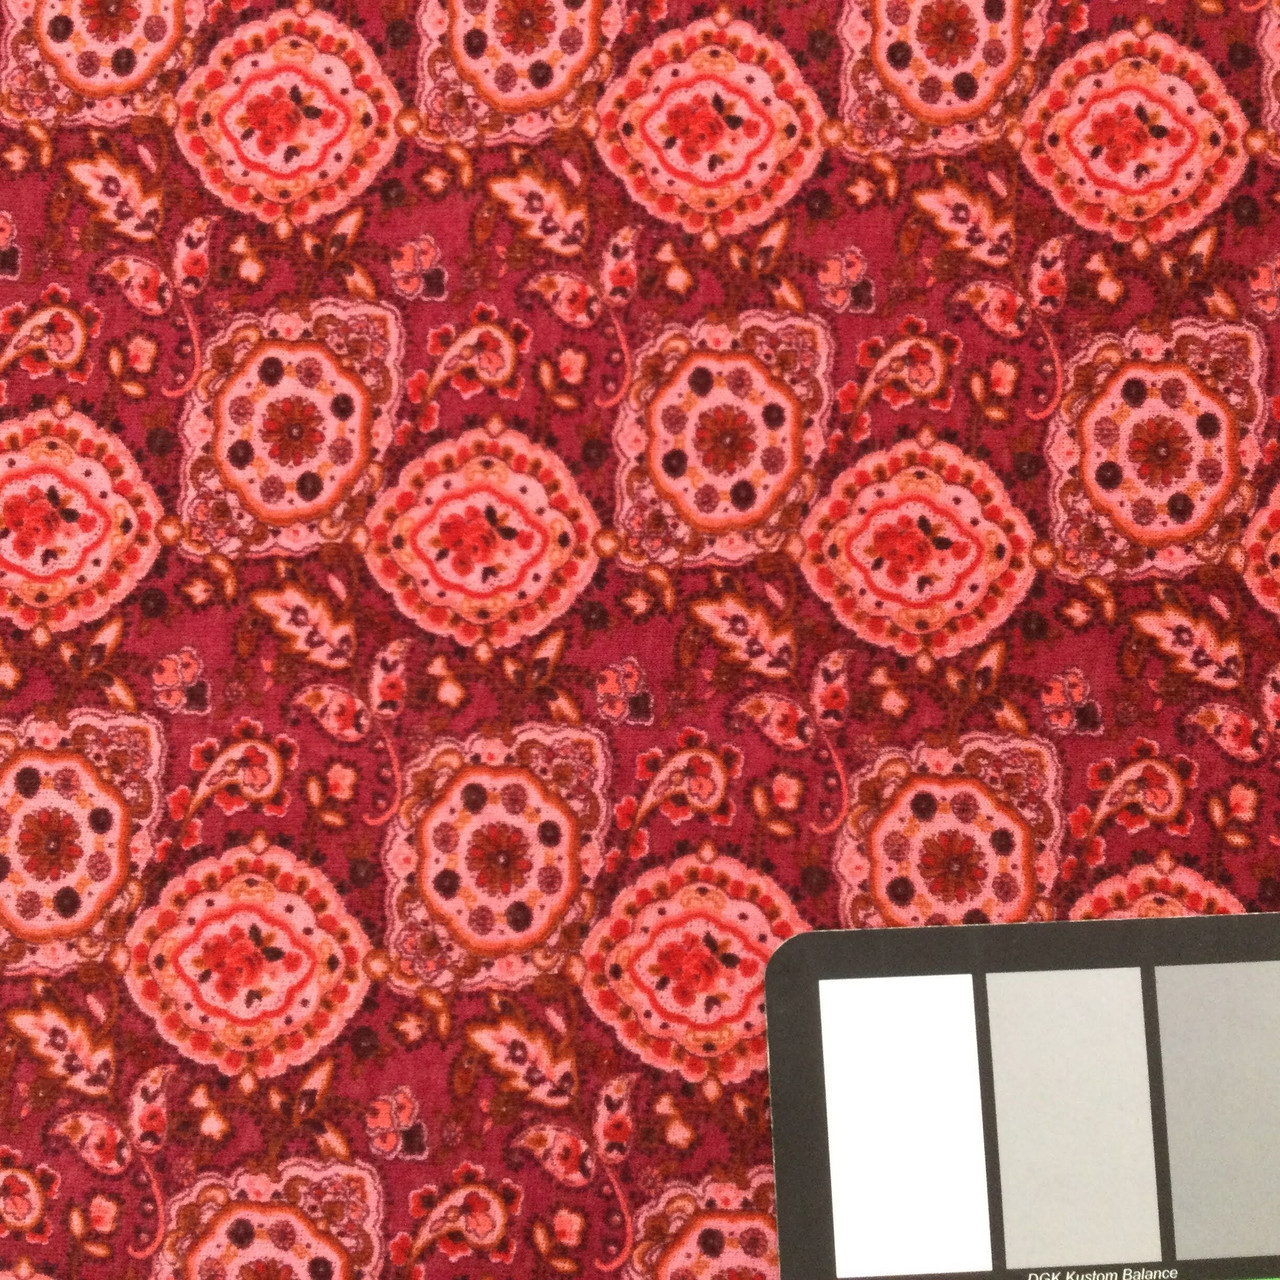 Custom Jersey Knit Fabric. Design Printed Knit Jersey Fabric